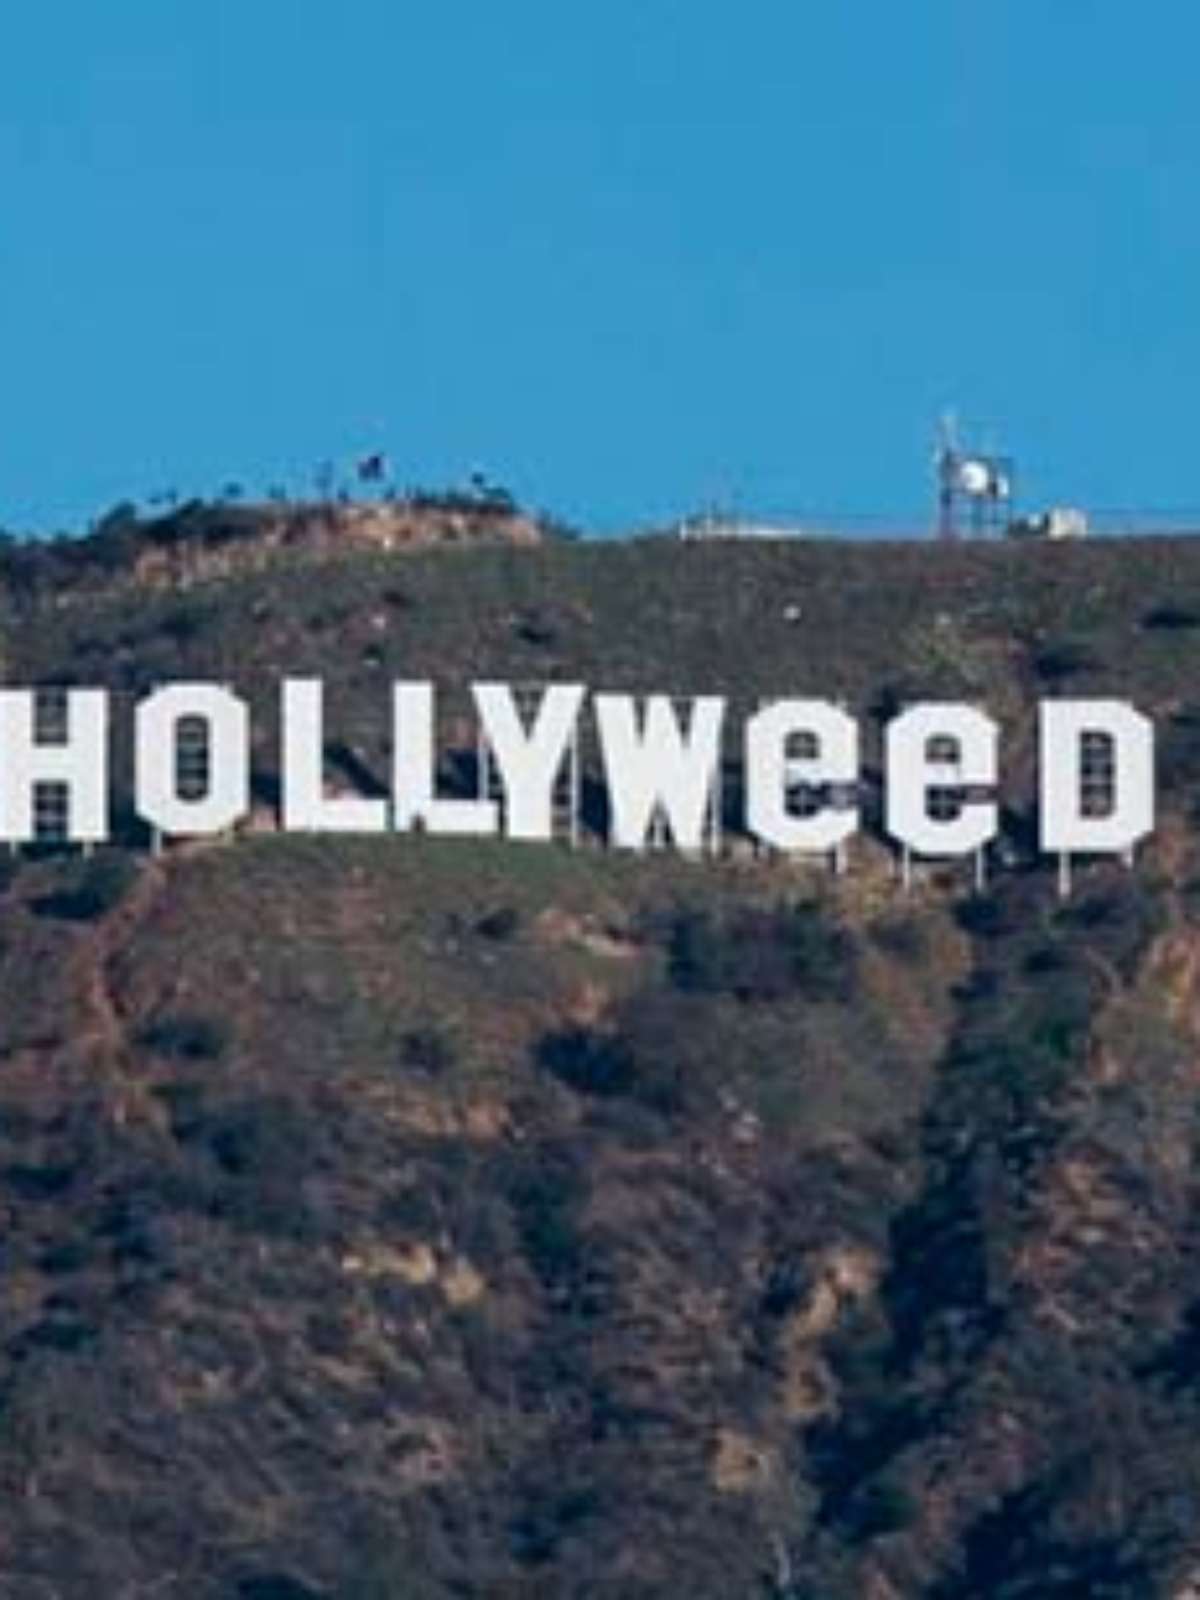 Letreiro de Hollywood é alvo de vandalismo e vira 'Hollyweed' no